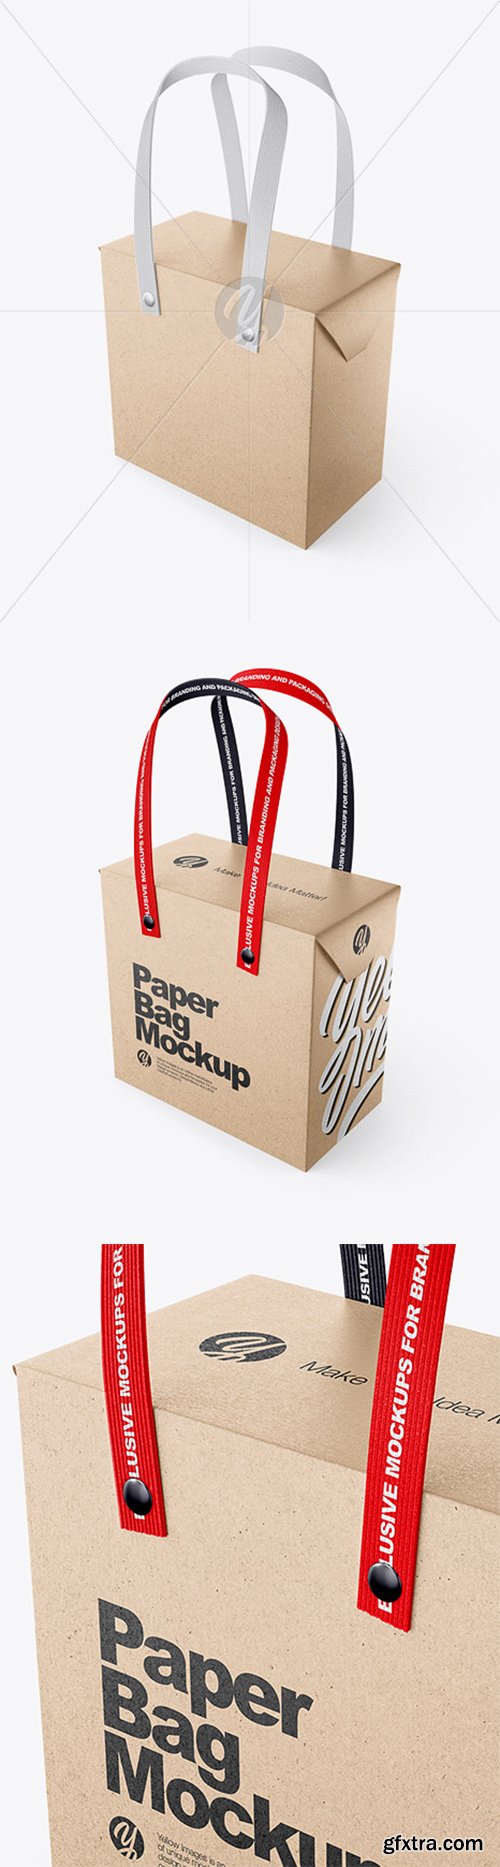 Kraft Paper Box Bag with Textile Handles Mockup - Half Side View 63612